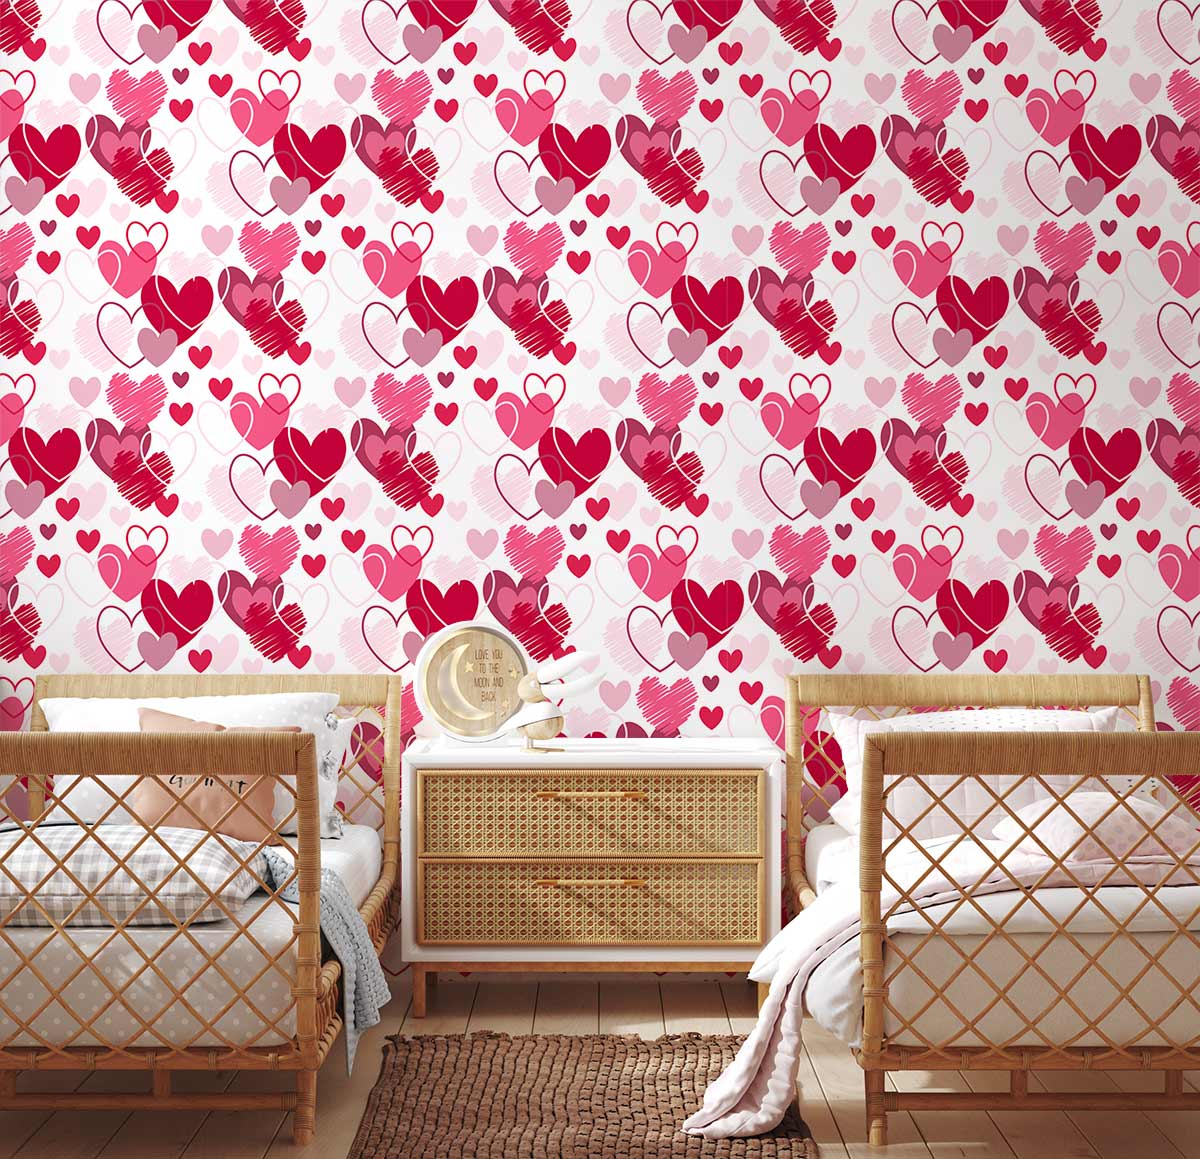 group Love Patterns wallpaper Mural for bedroom